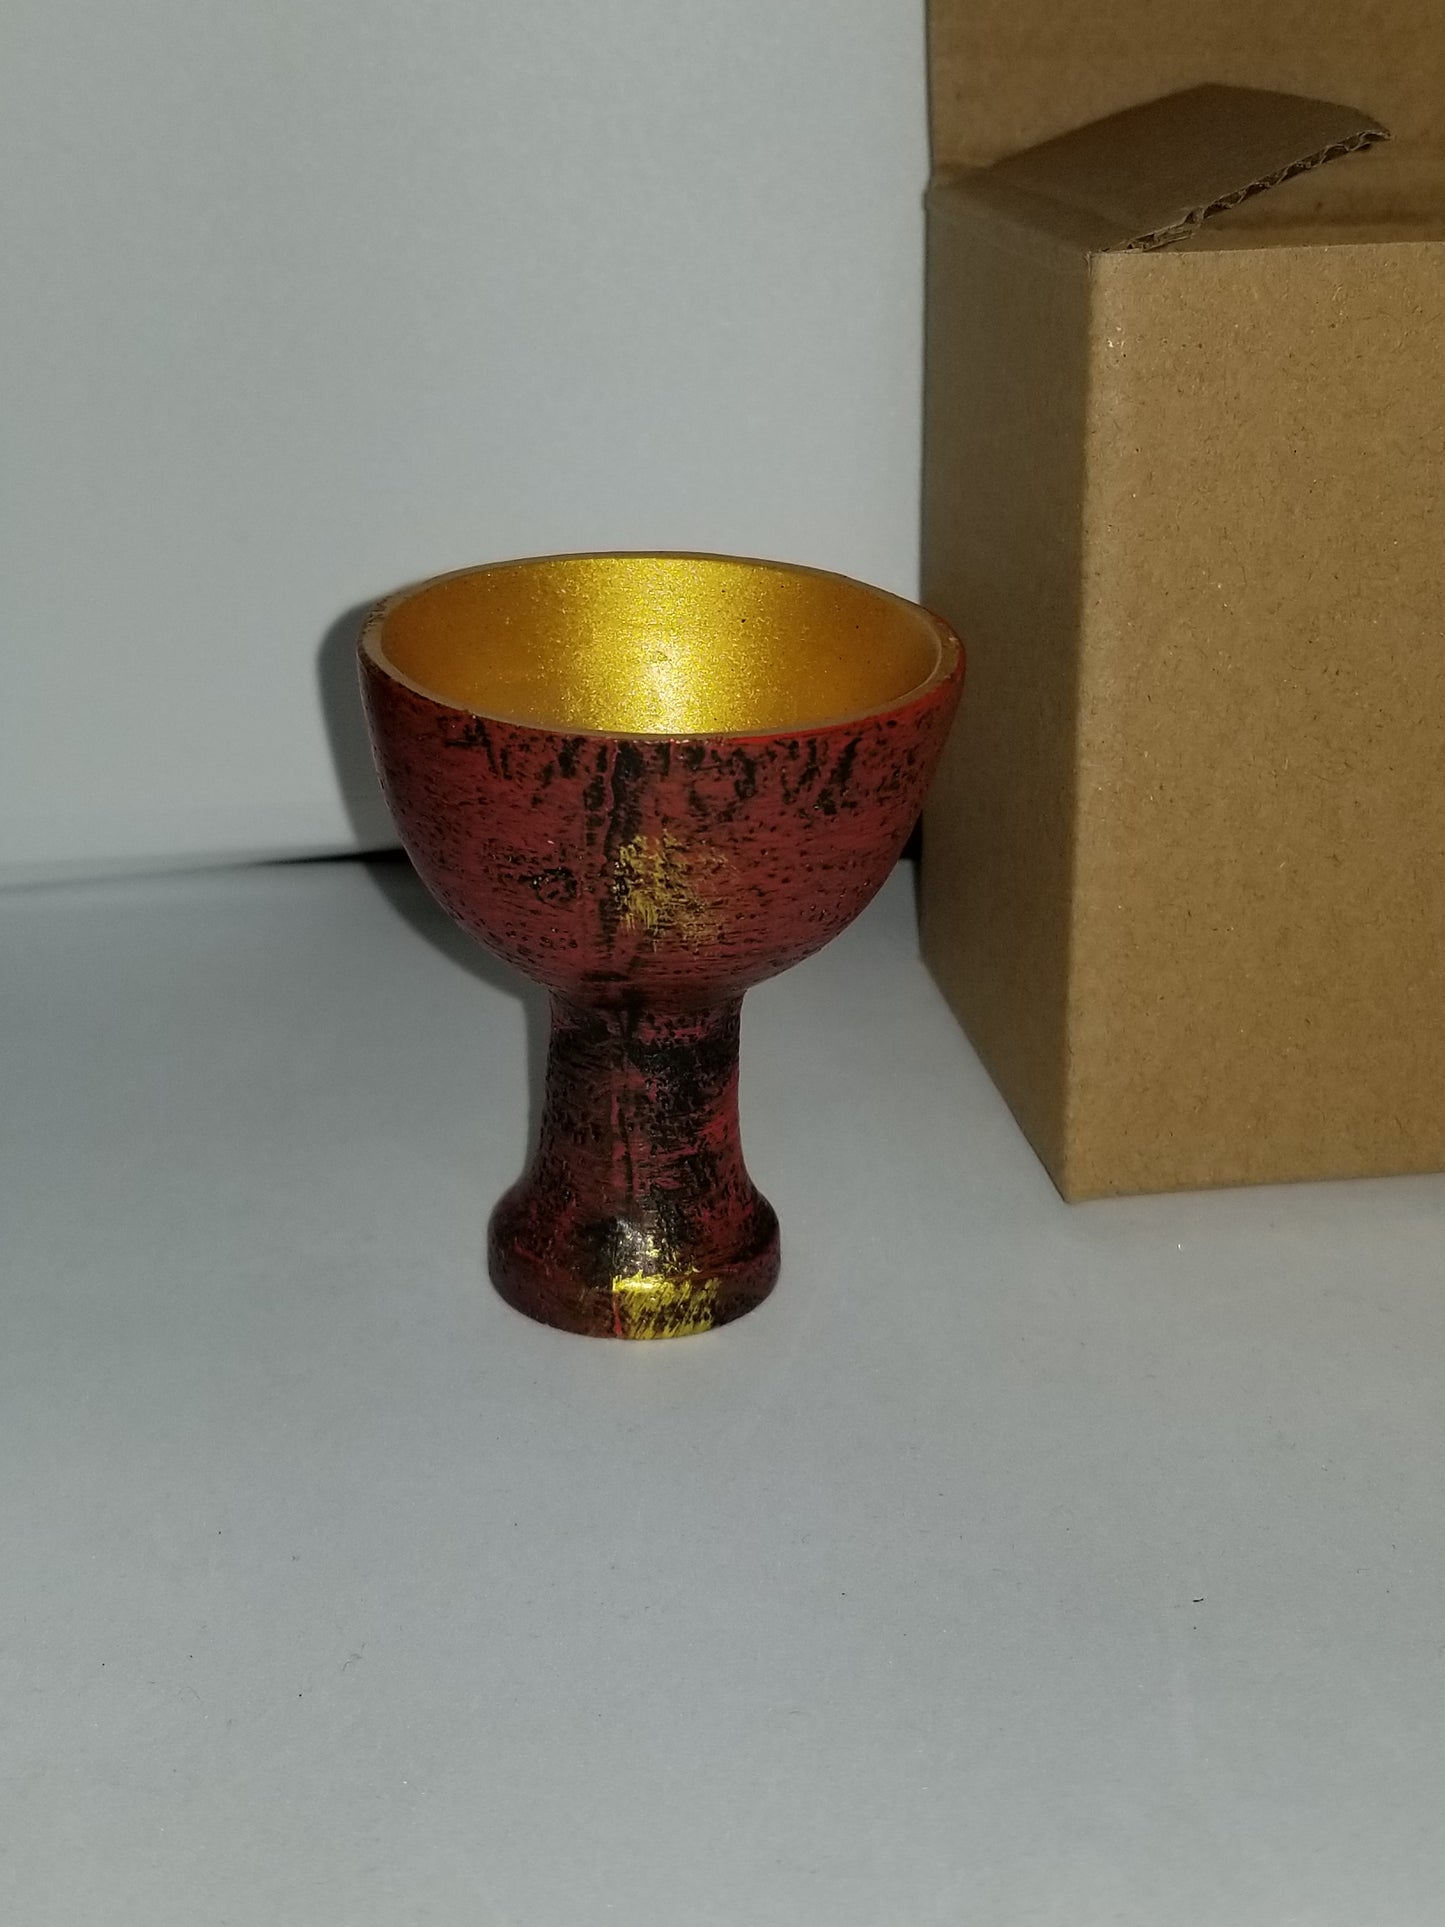 Indiana Jones "Raiders of the Lost Ark" minitaure THE HOLY GRAIL cup